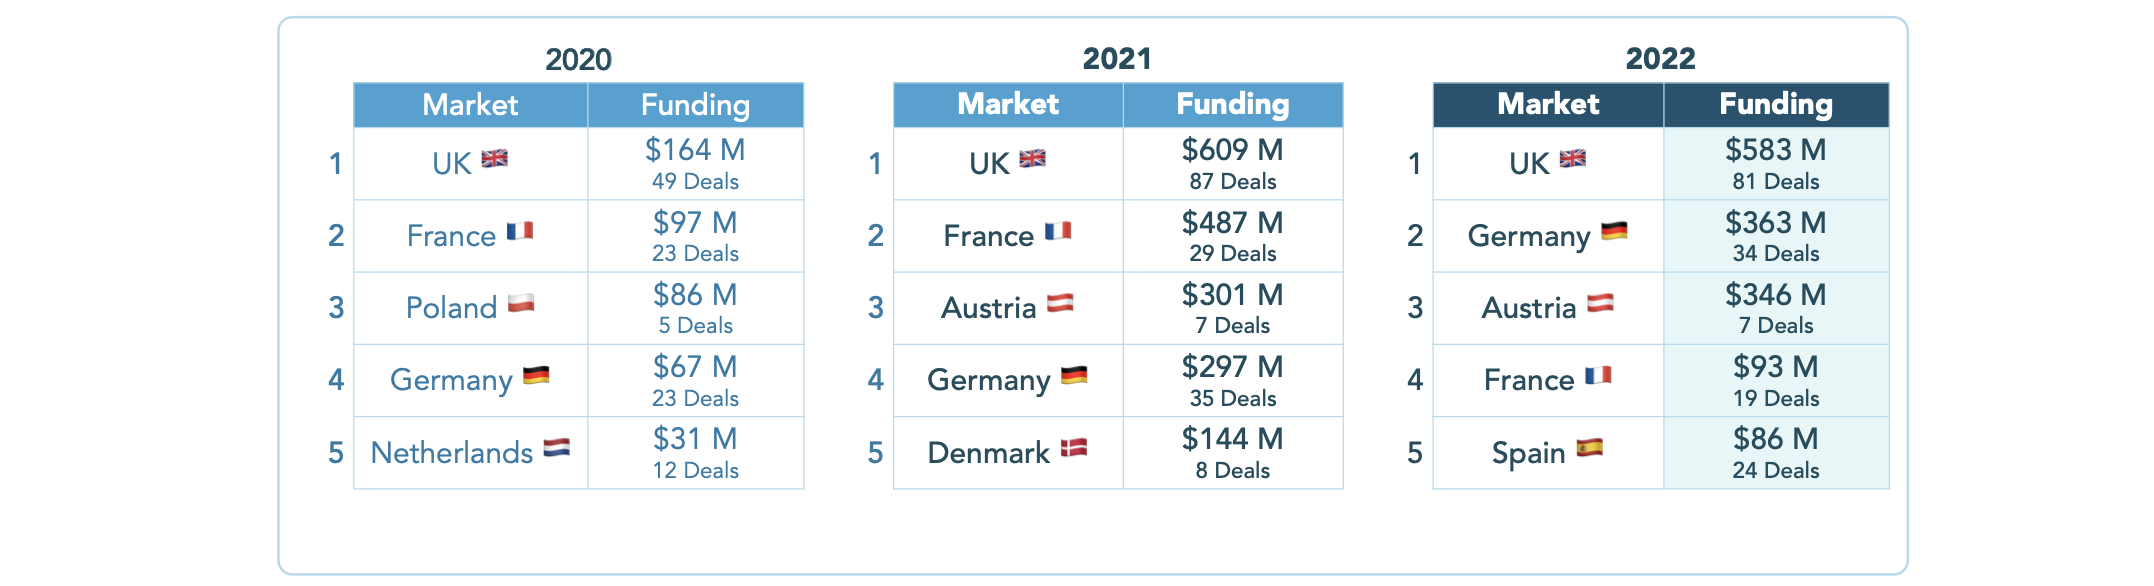 Edtech financing in Europe by market.  Image credit: Brighteye Ventures